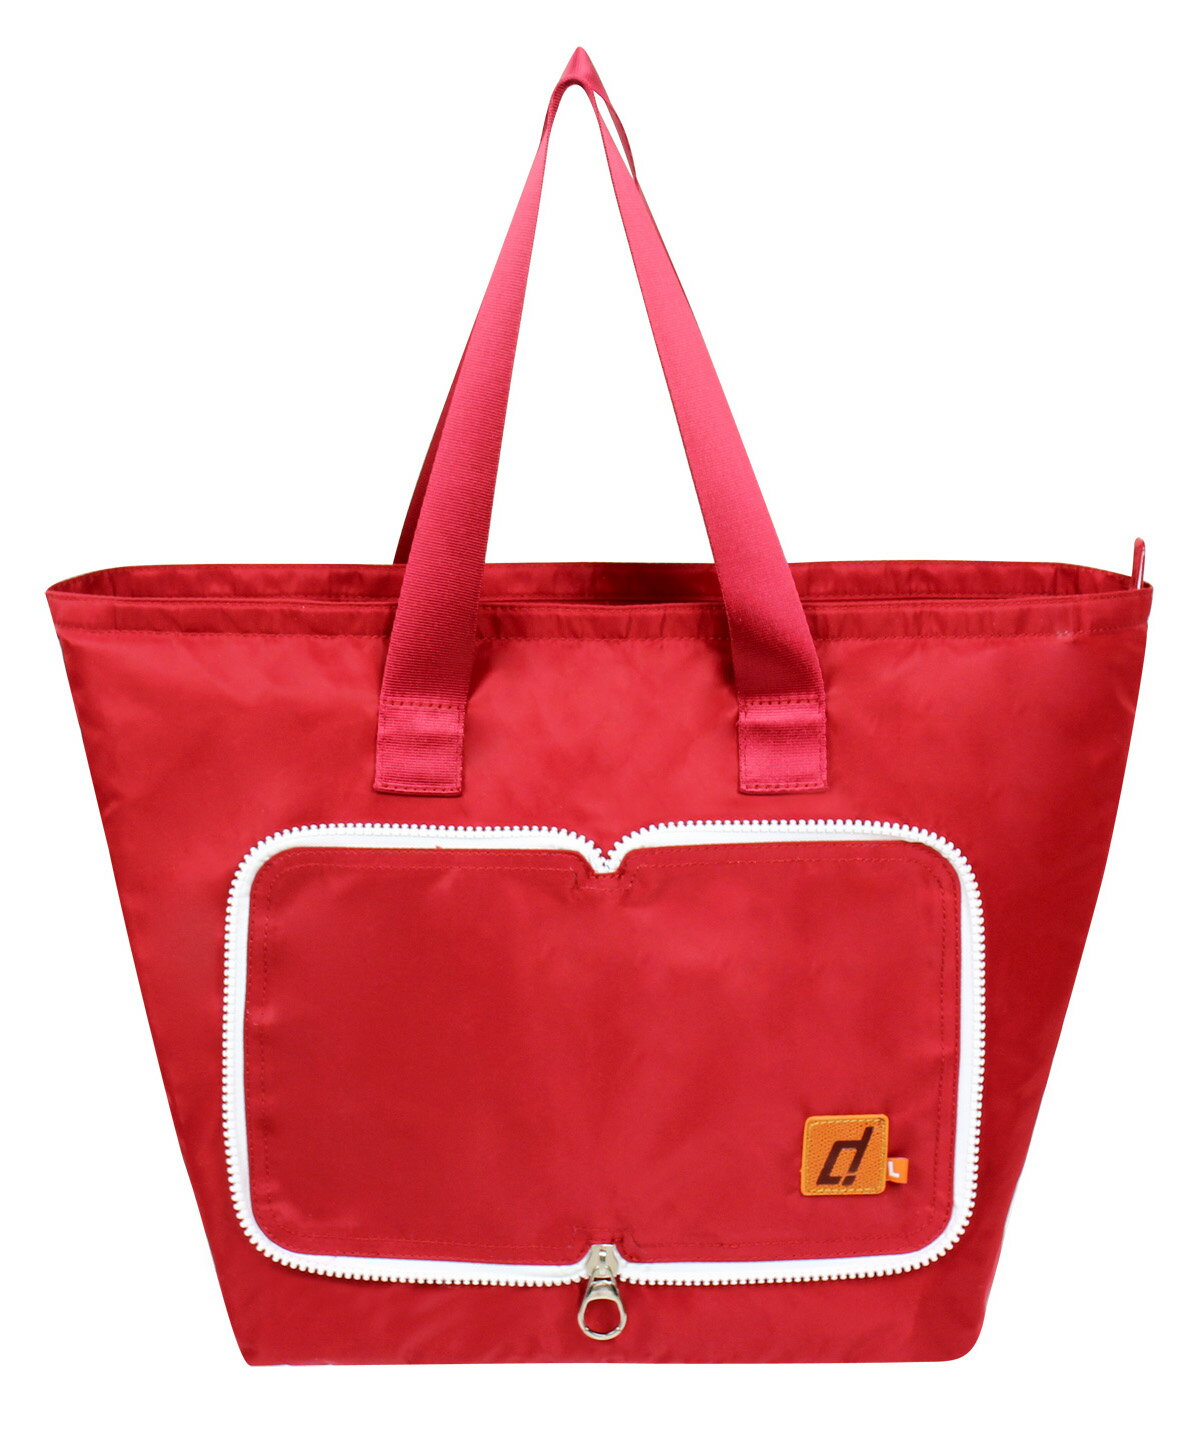 departure 旅行趣 收納/摺疊袋 萬用旅行便利摺疊帶-L紅